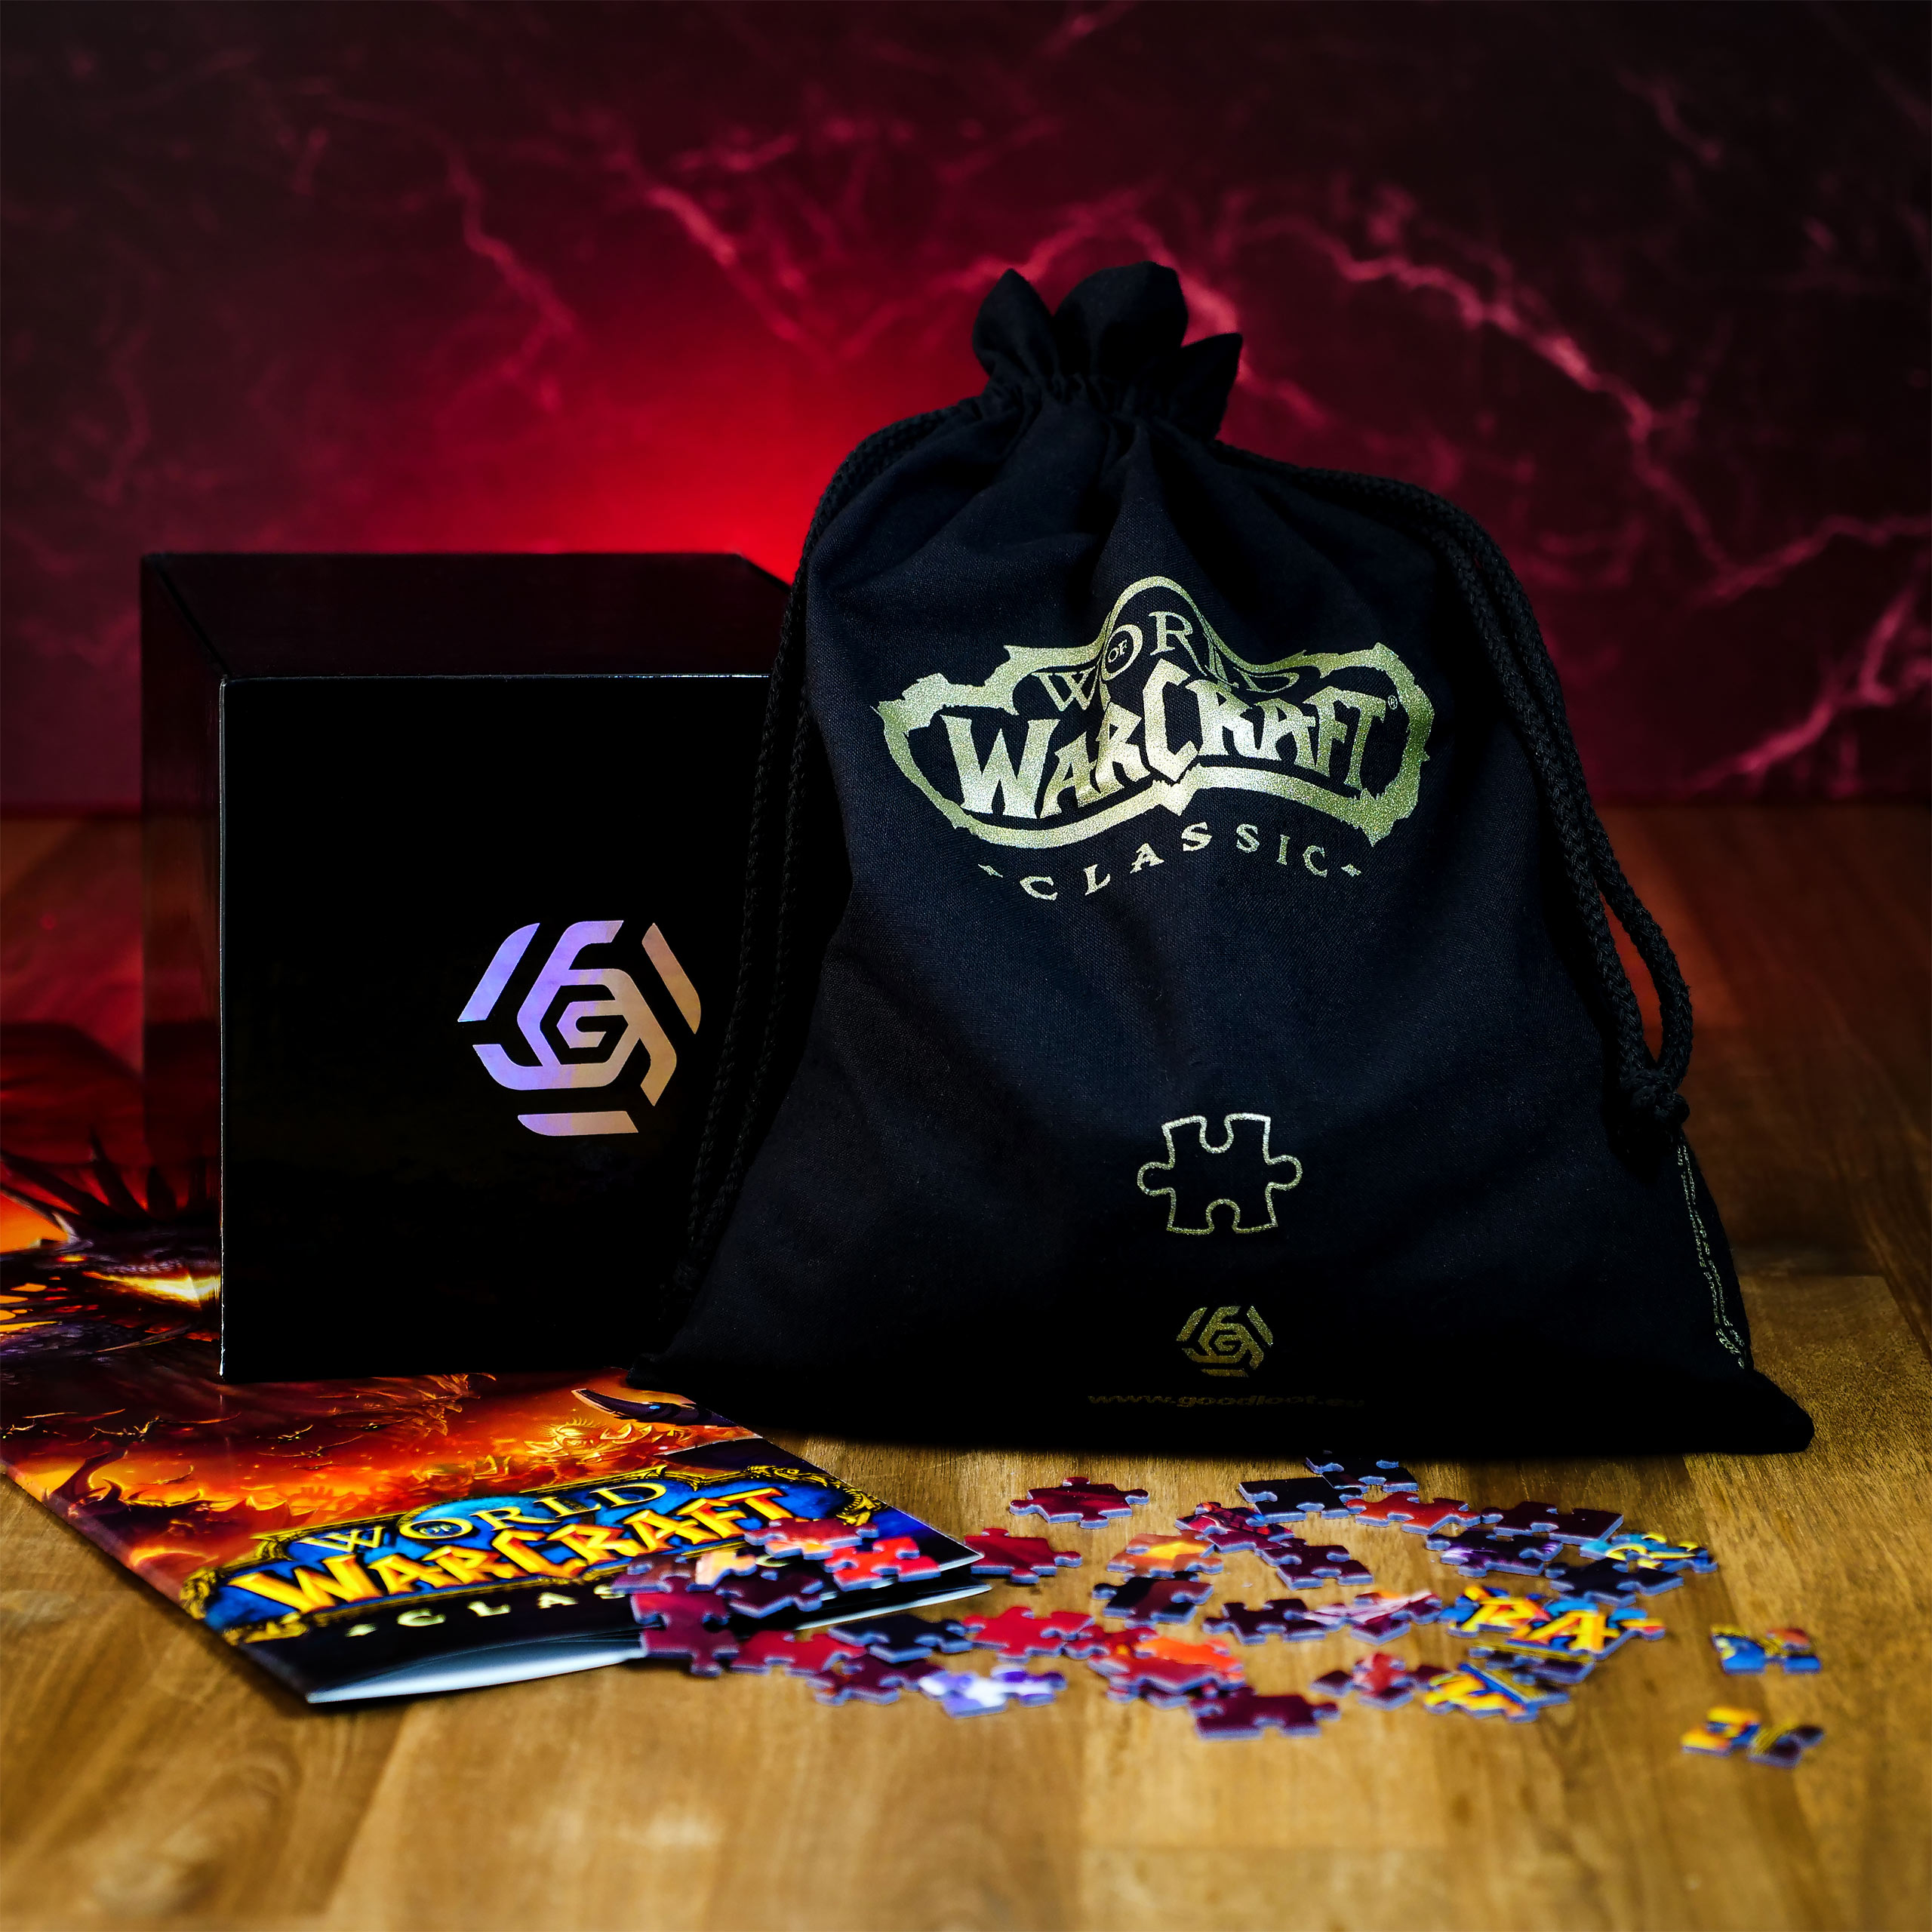 World of Warcraft - Onyxia puzzel met logo stoffen zakje